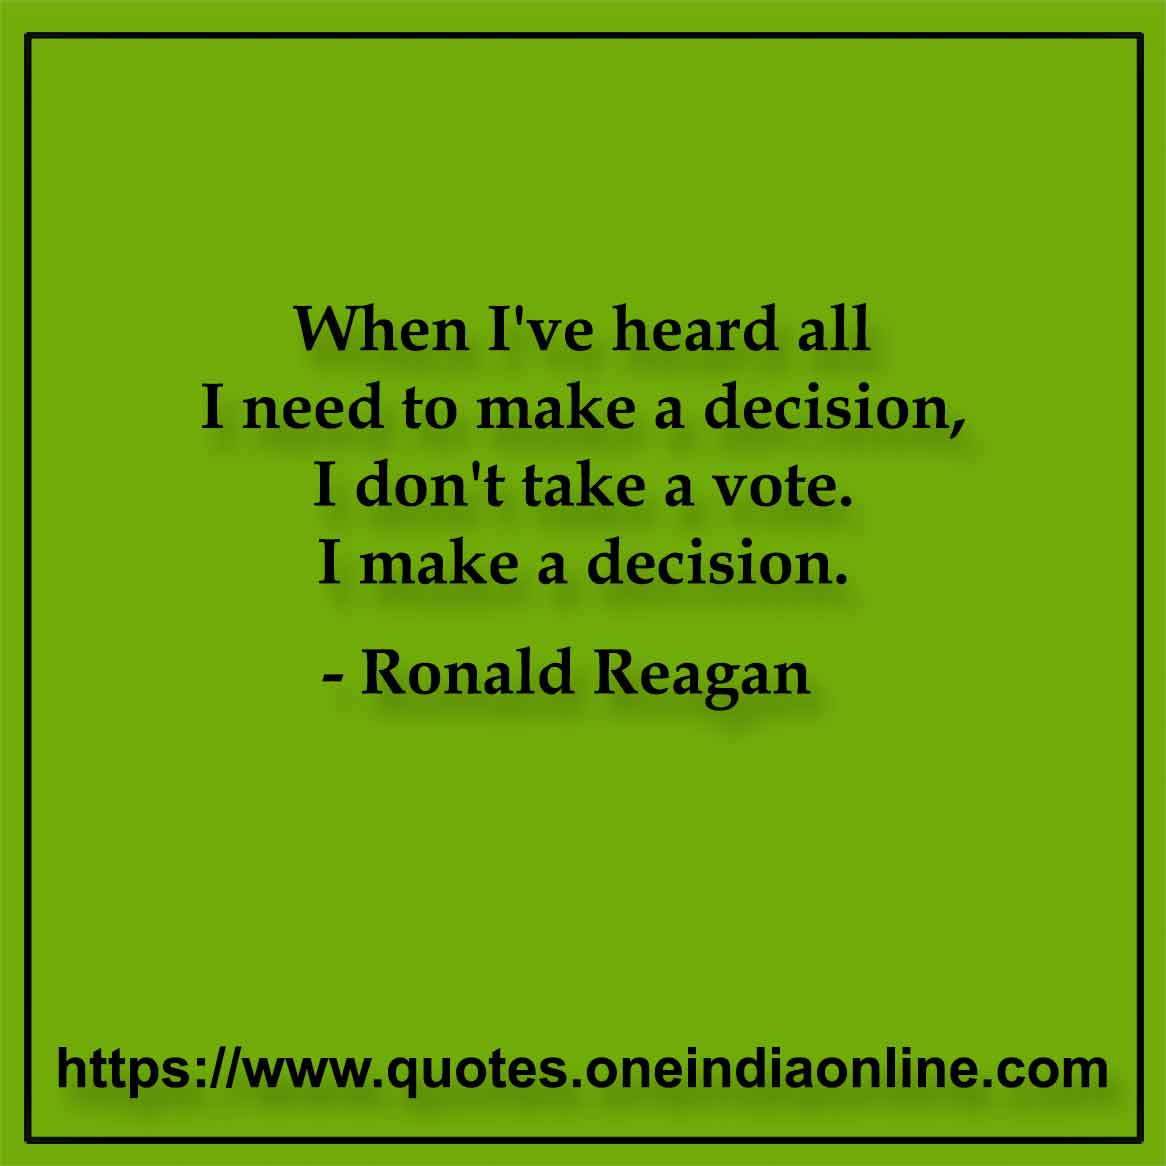 When I've heard all I need to make a decision, I don't take a vote. I make a decision. 

-  Ronald Reagan